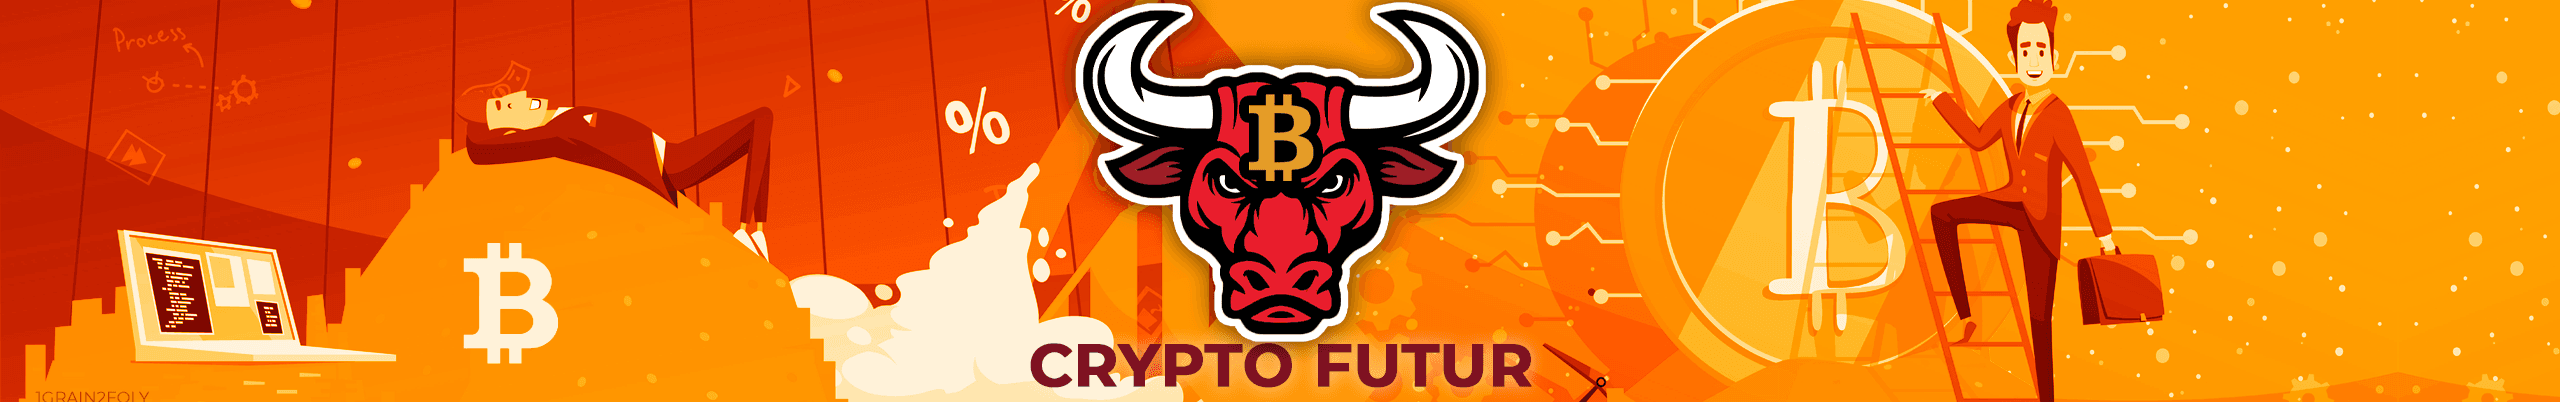 Crypto_Futur banner